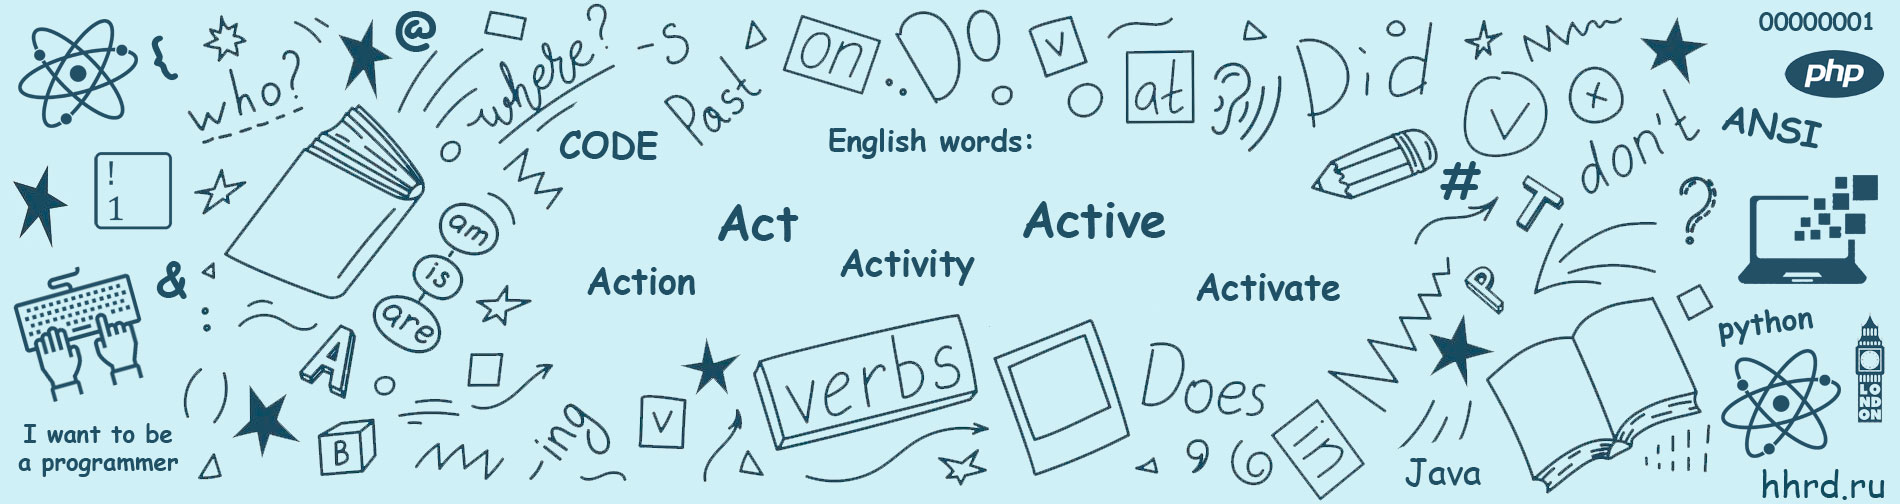 Символы английского языка и слова: act, action, activity, active, activate. Клипарт.